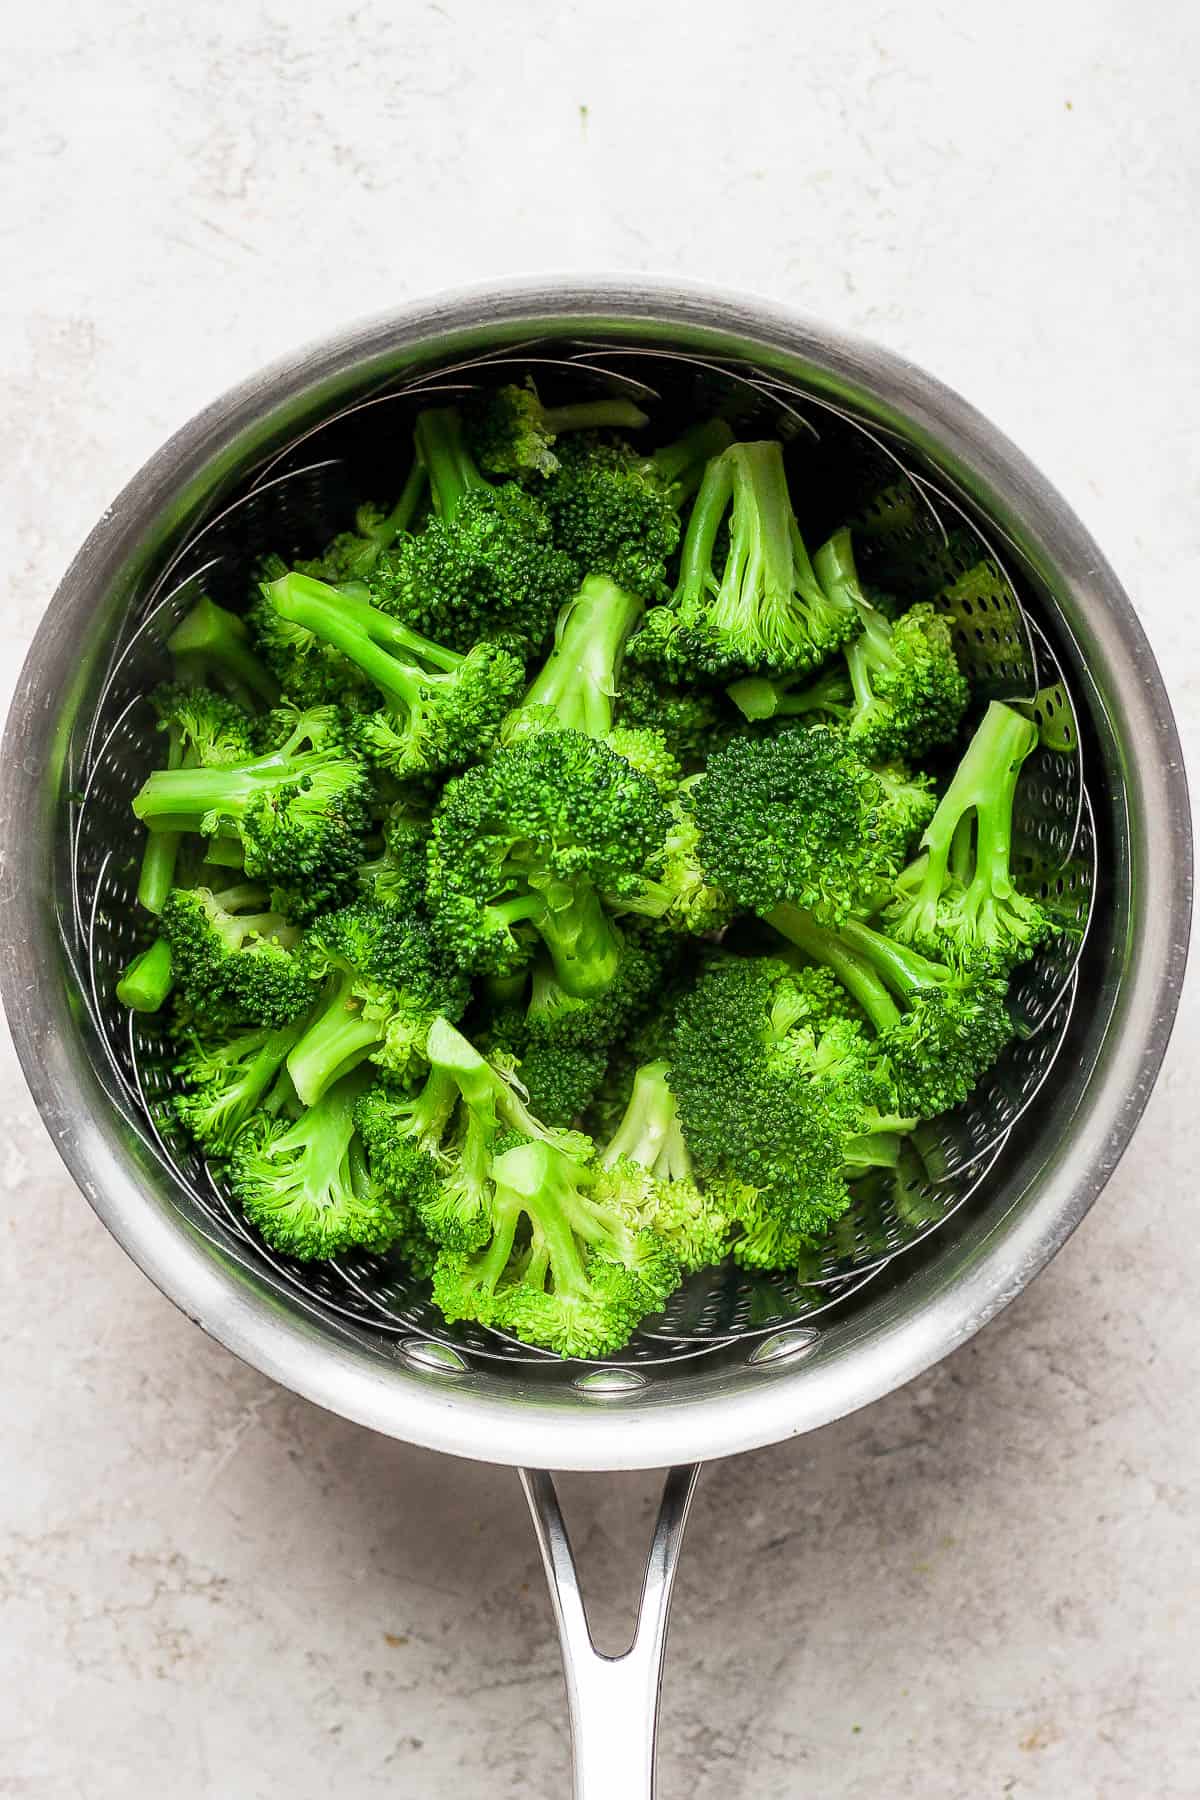 Steamed broccoli in a steamer basket.